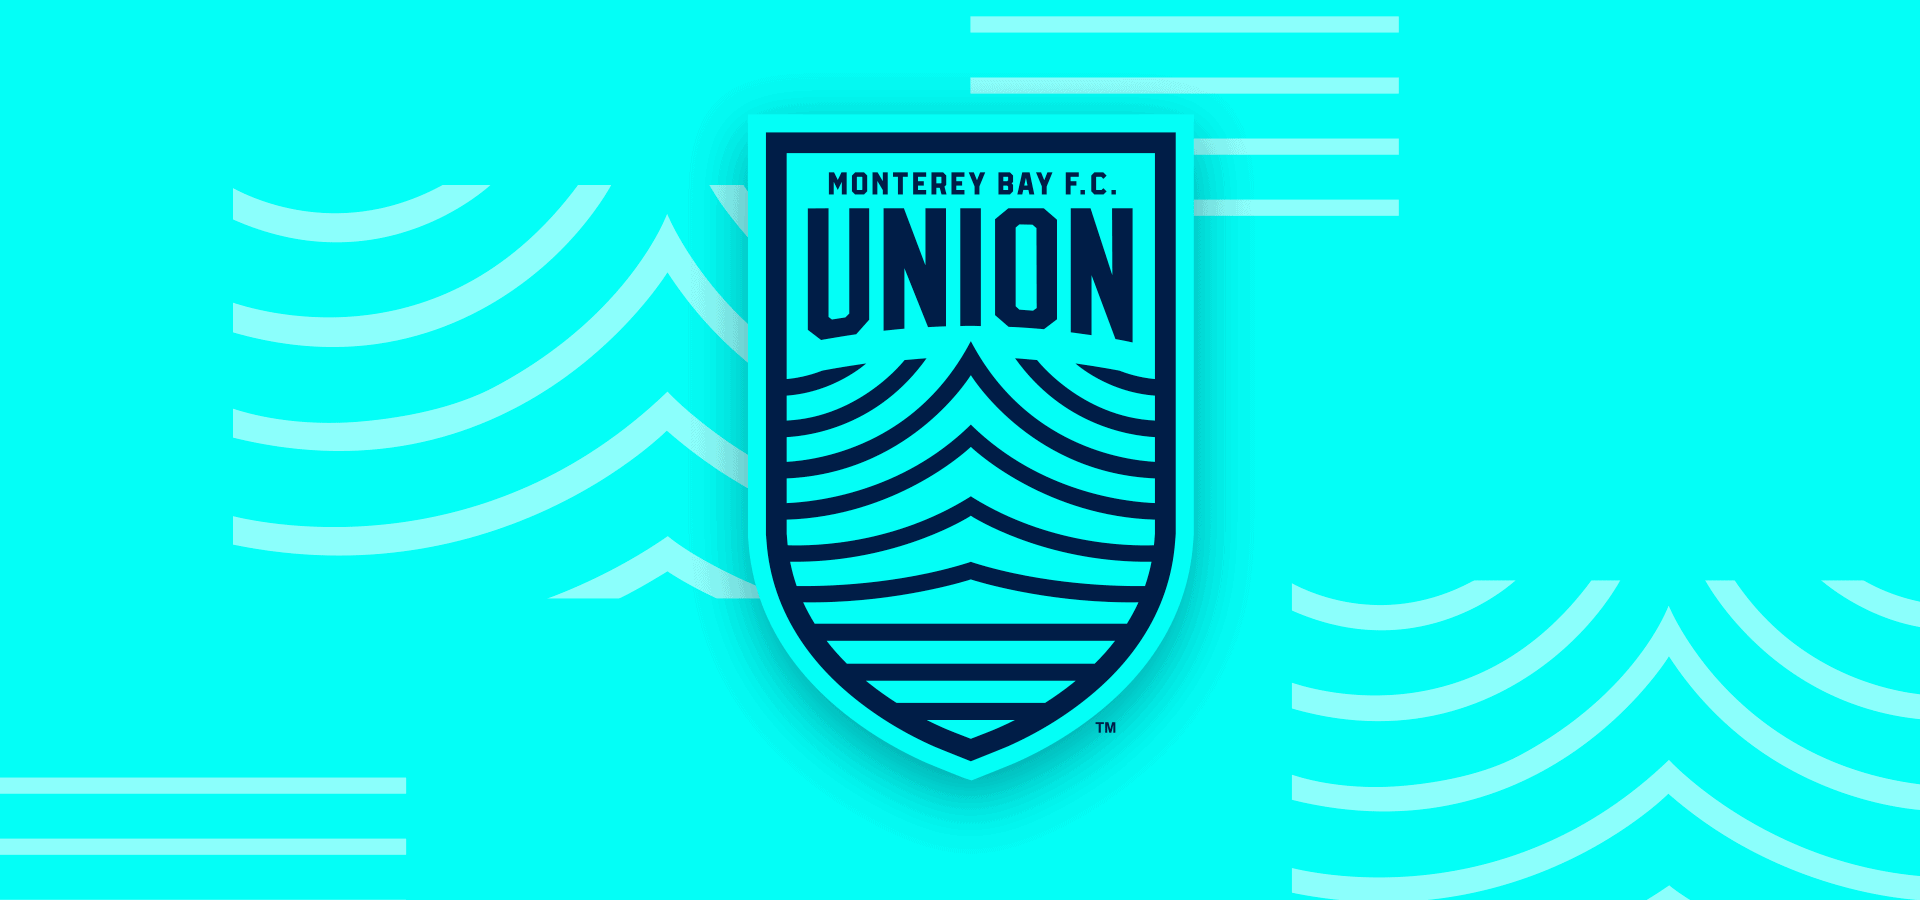 Monterey Bay Football Club - Hospitality Industry Night